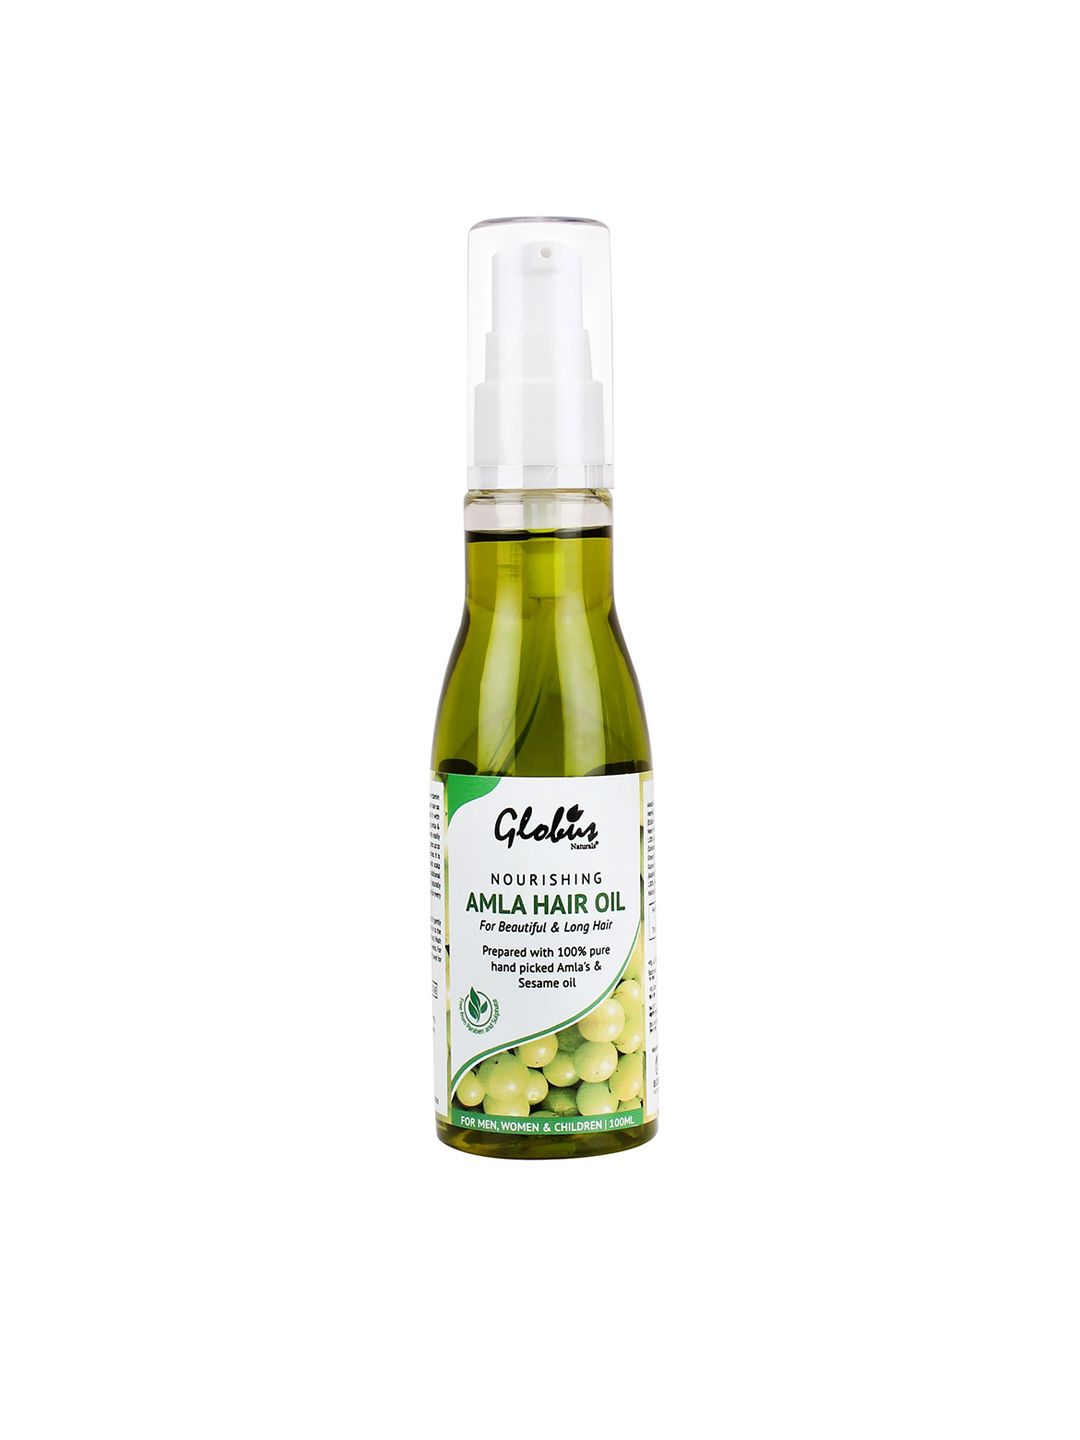 Globus Naturals Nourishing Amla Hair Oil 100ml Price in India